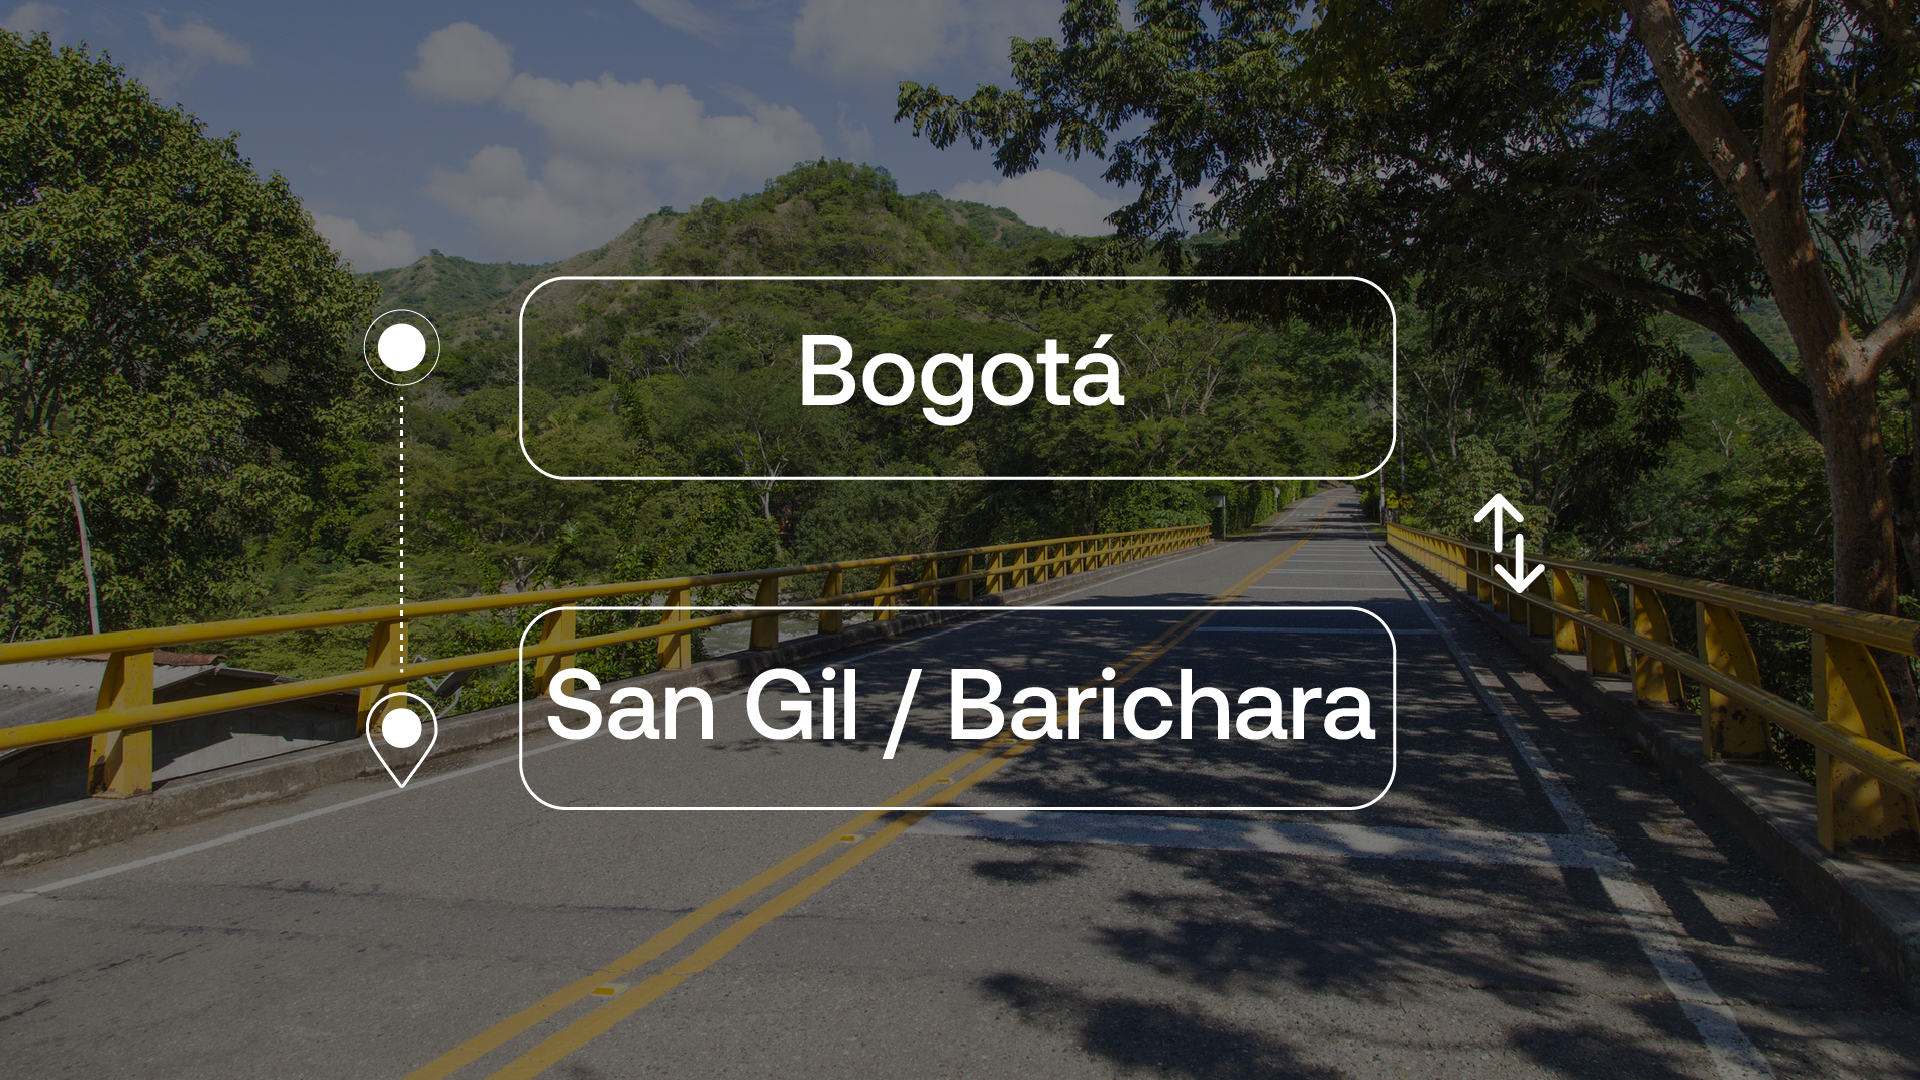 Bogotá desde o hacia Barichara o San Gil Traslado Privado